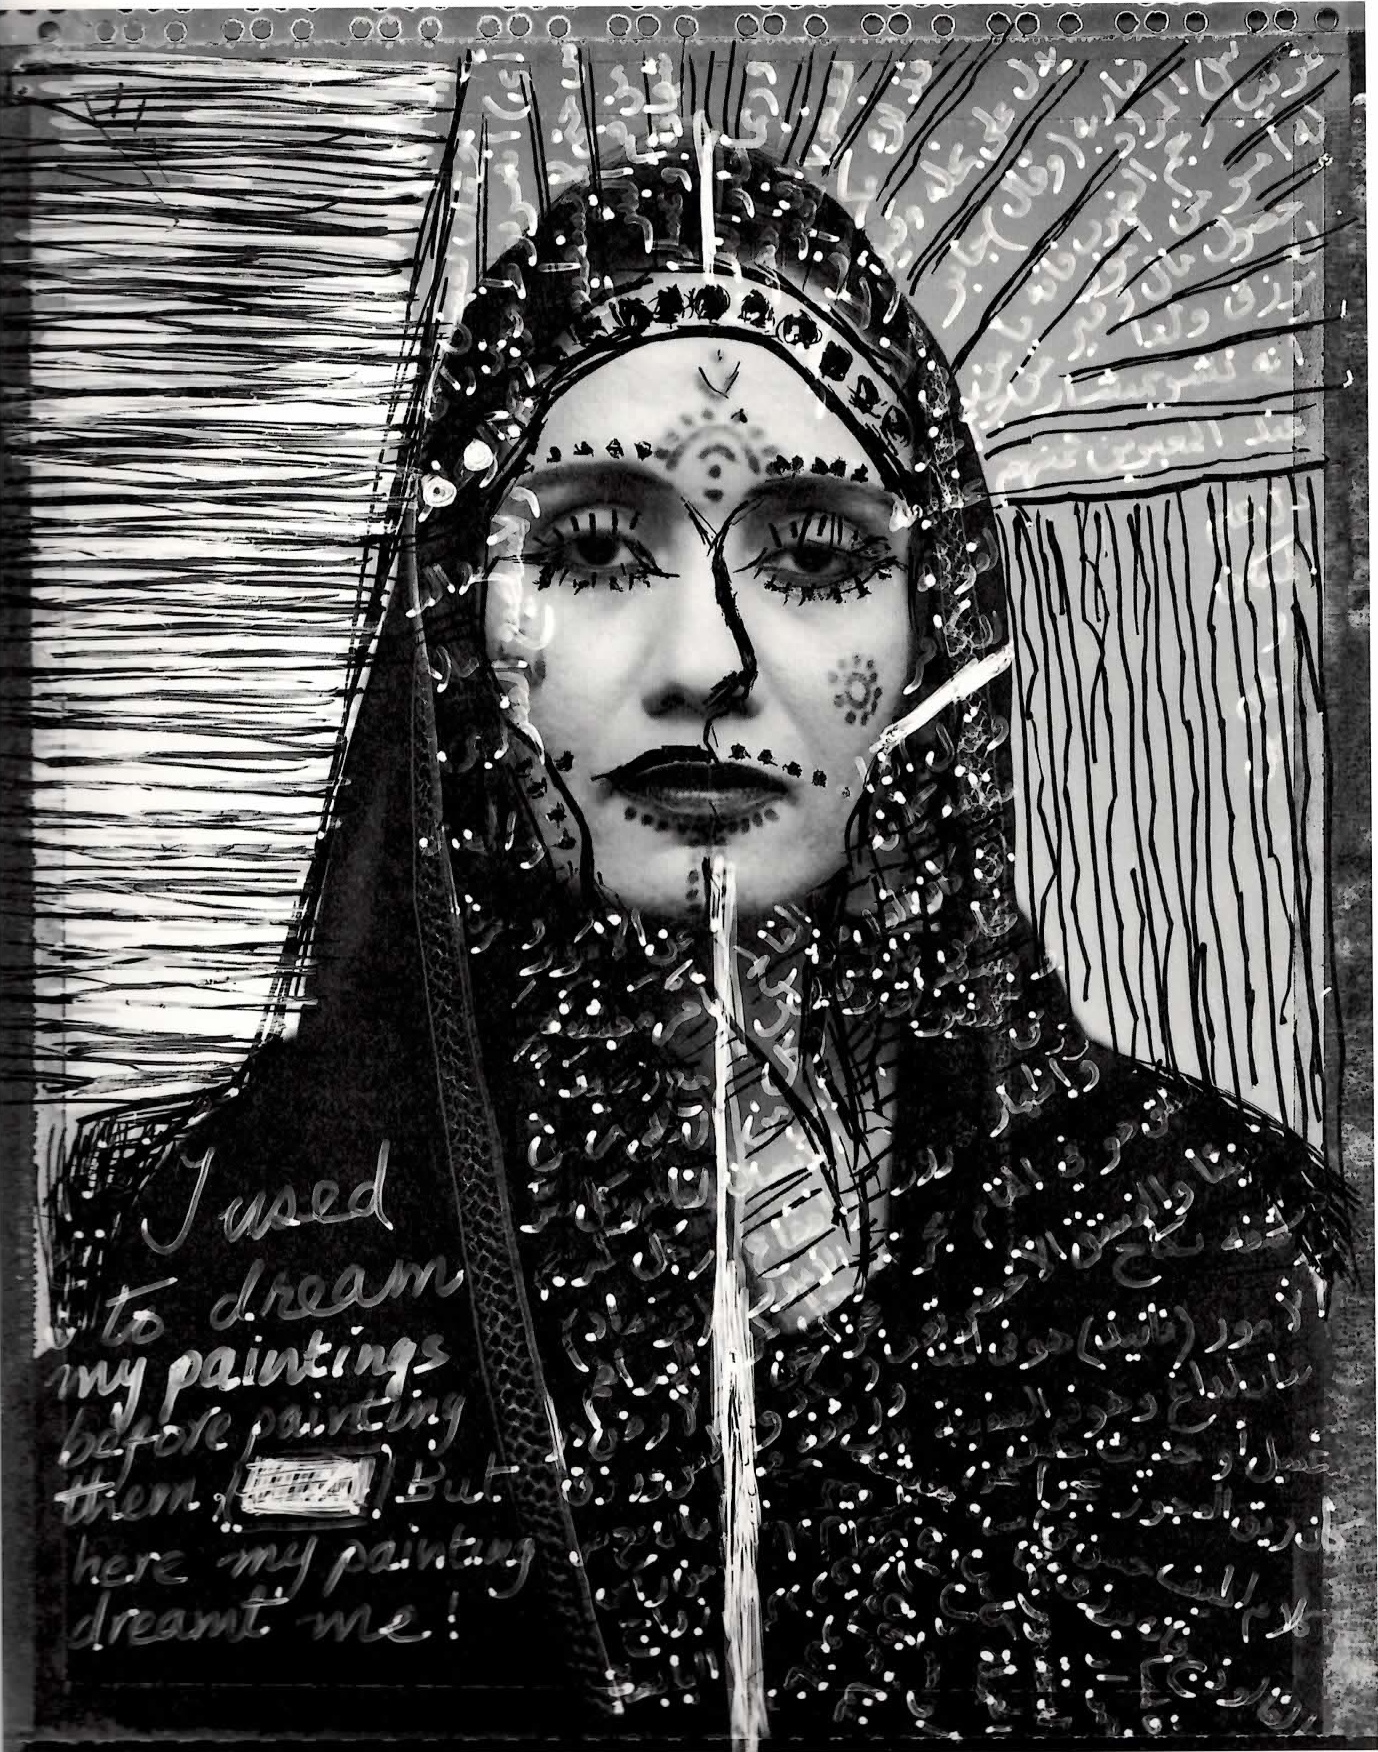 Self Portraits and Dreams (Saudi Arabia), by Wendy Ewald - ewald